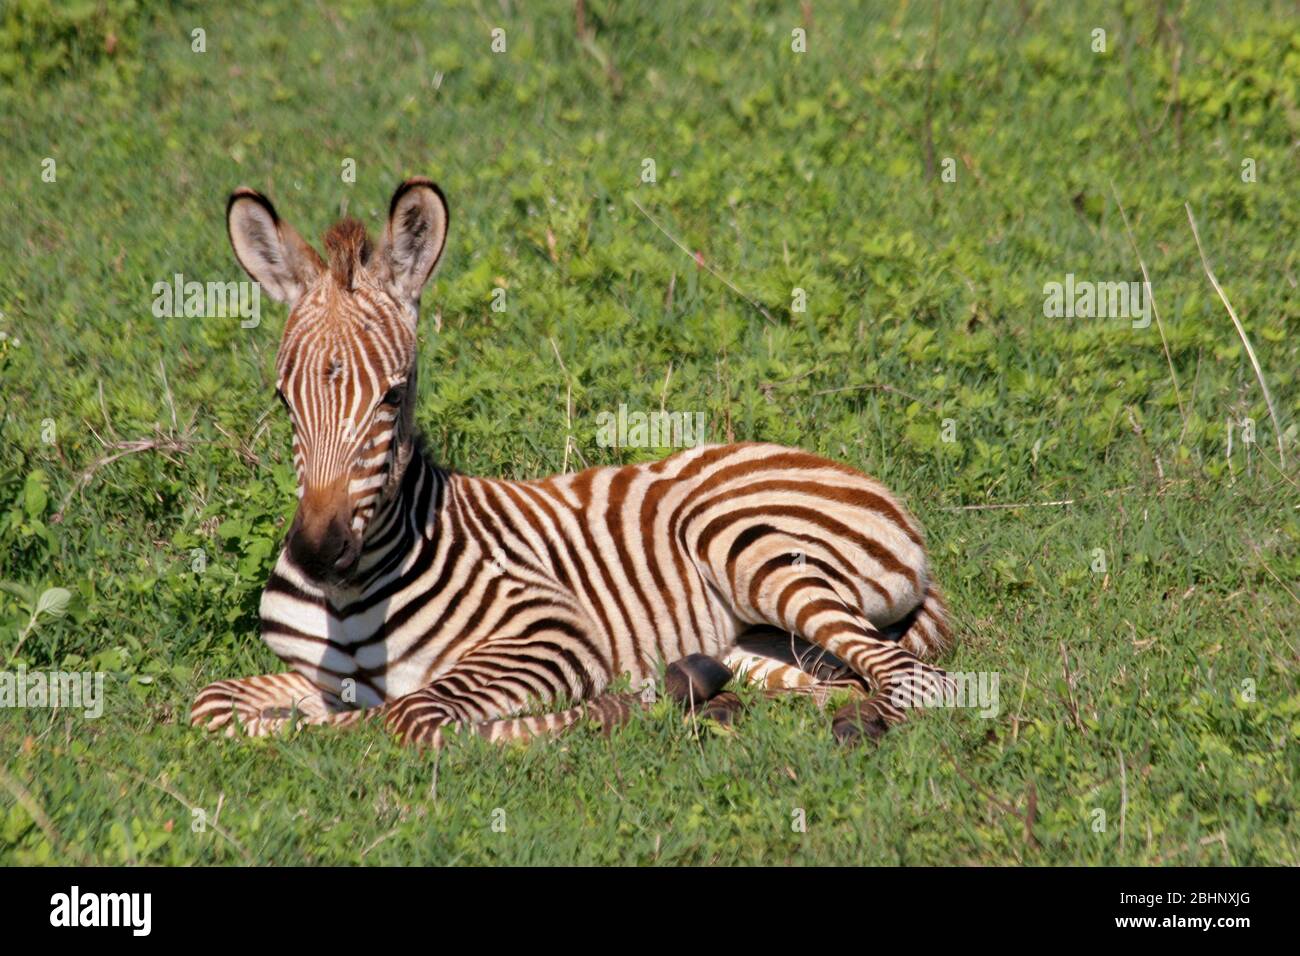 Juvenile Zebra foal Photographed in Tanzania Stock Photo